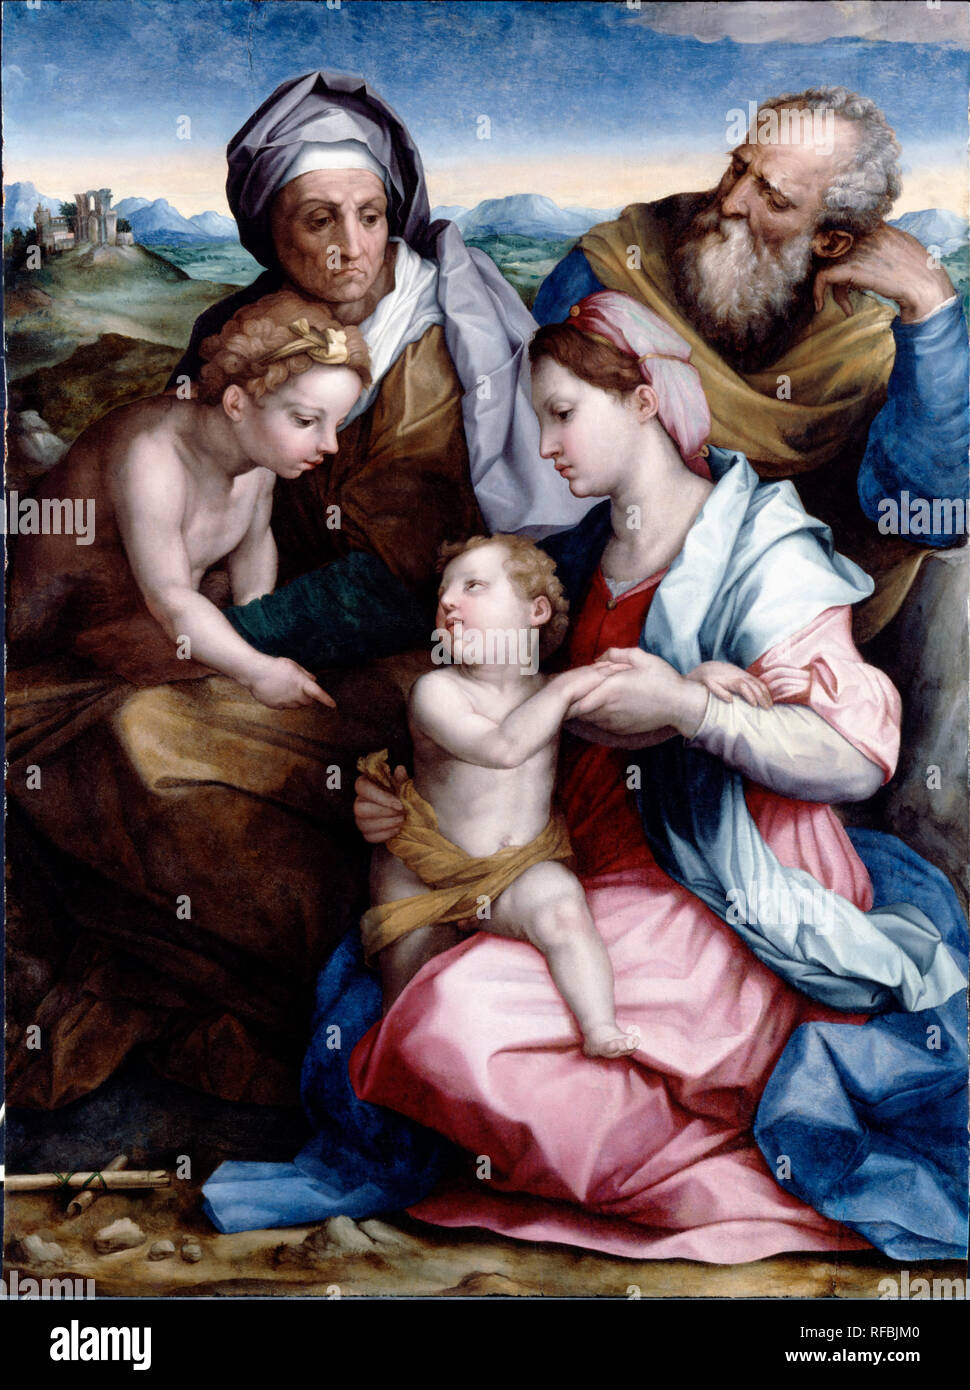 Holy Family. Date/Period: 16th century. Oil on panel. Height: 144.8 cm (57 in); Width: 107.7 cm (42.4 in). Author: ANDREA DEL SARTO. Giorgio Vasari. Stock Photo